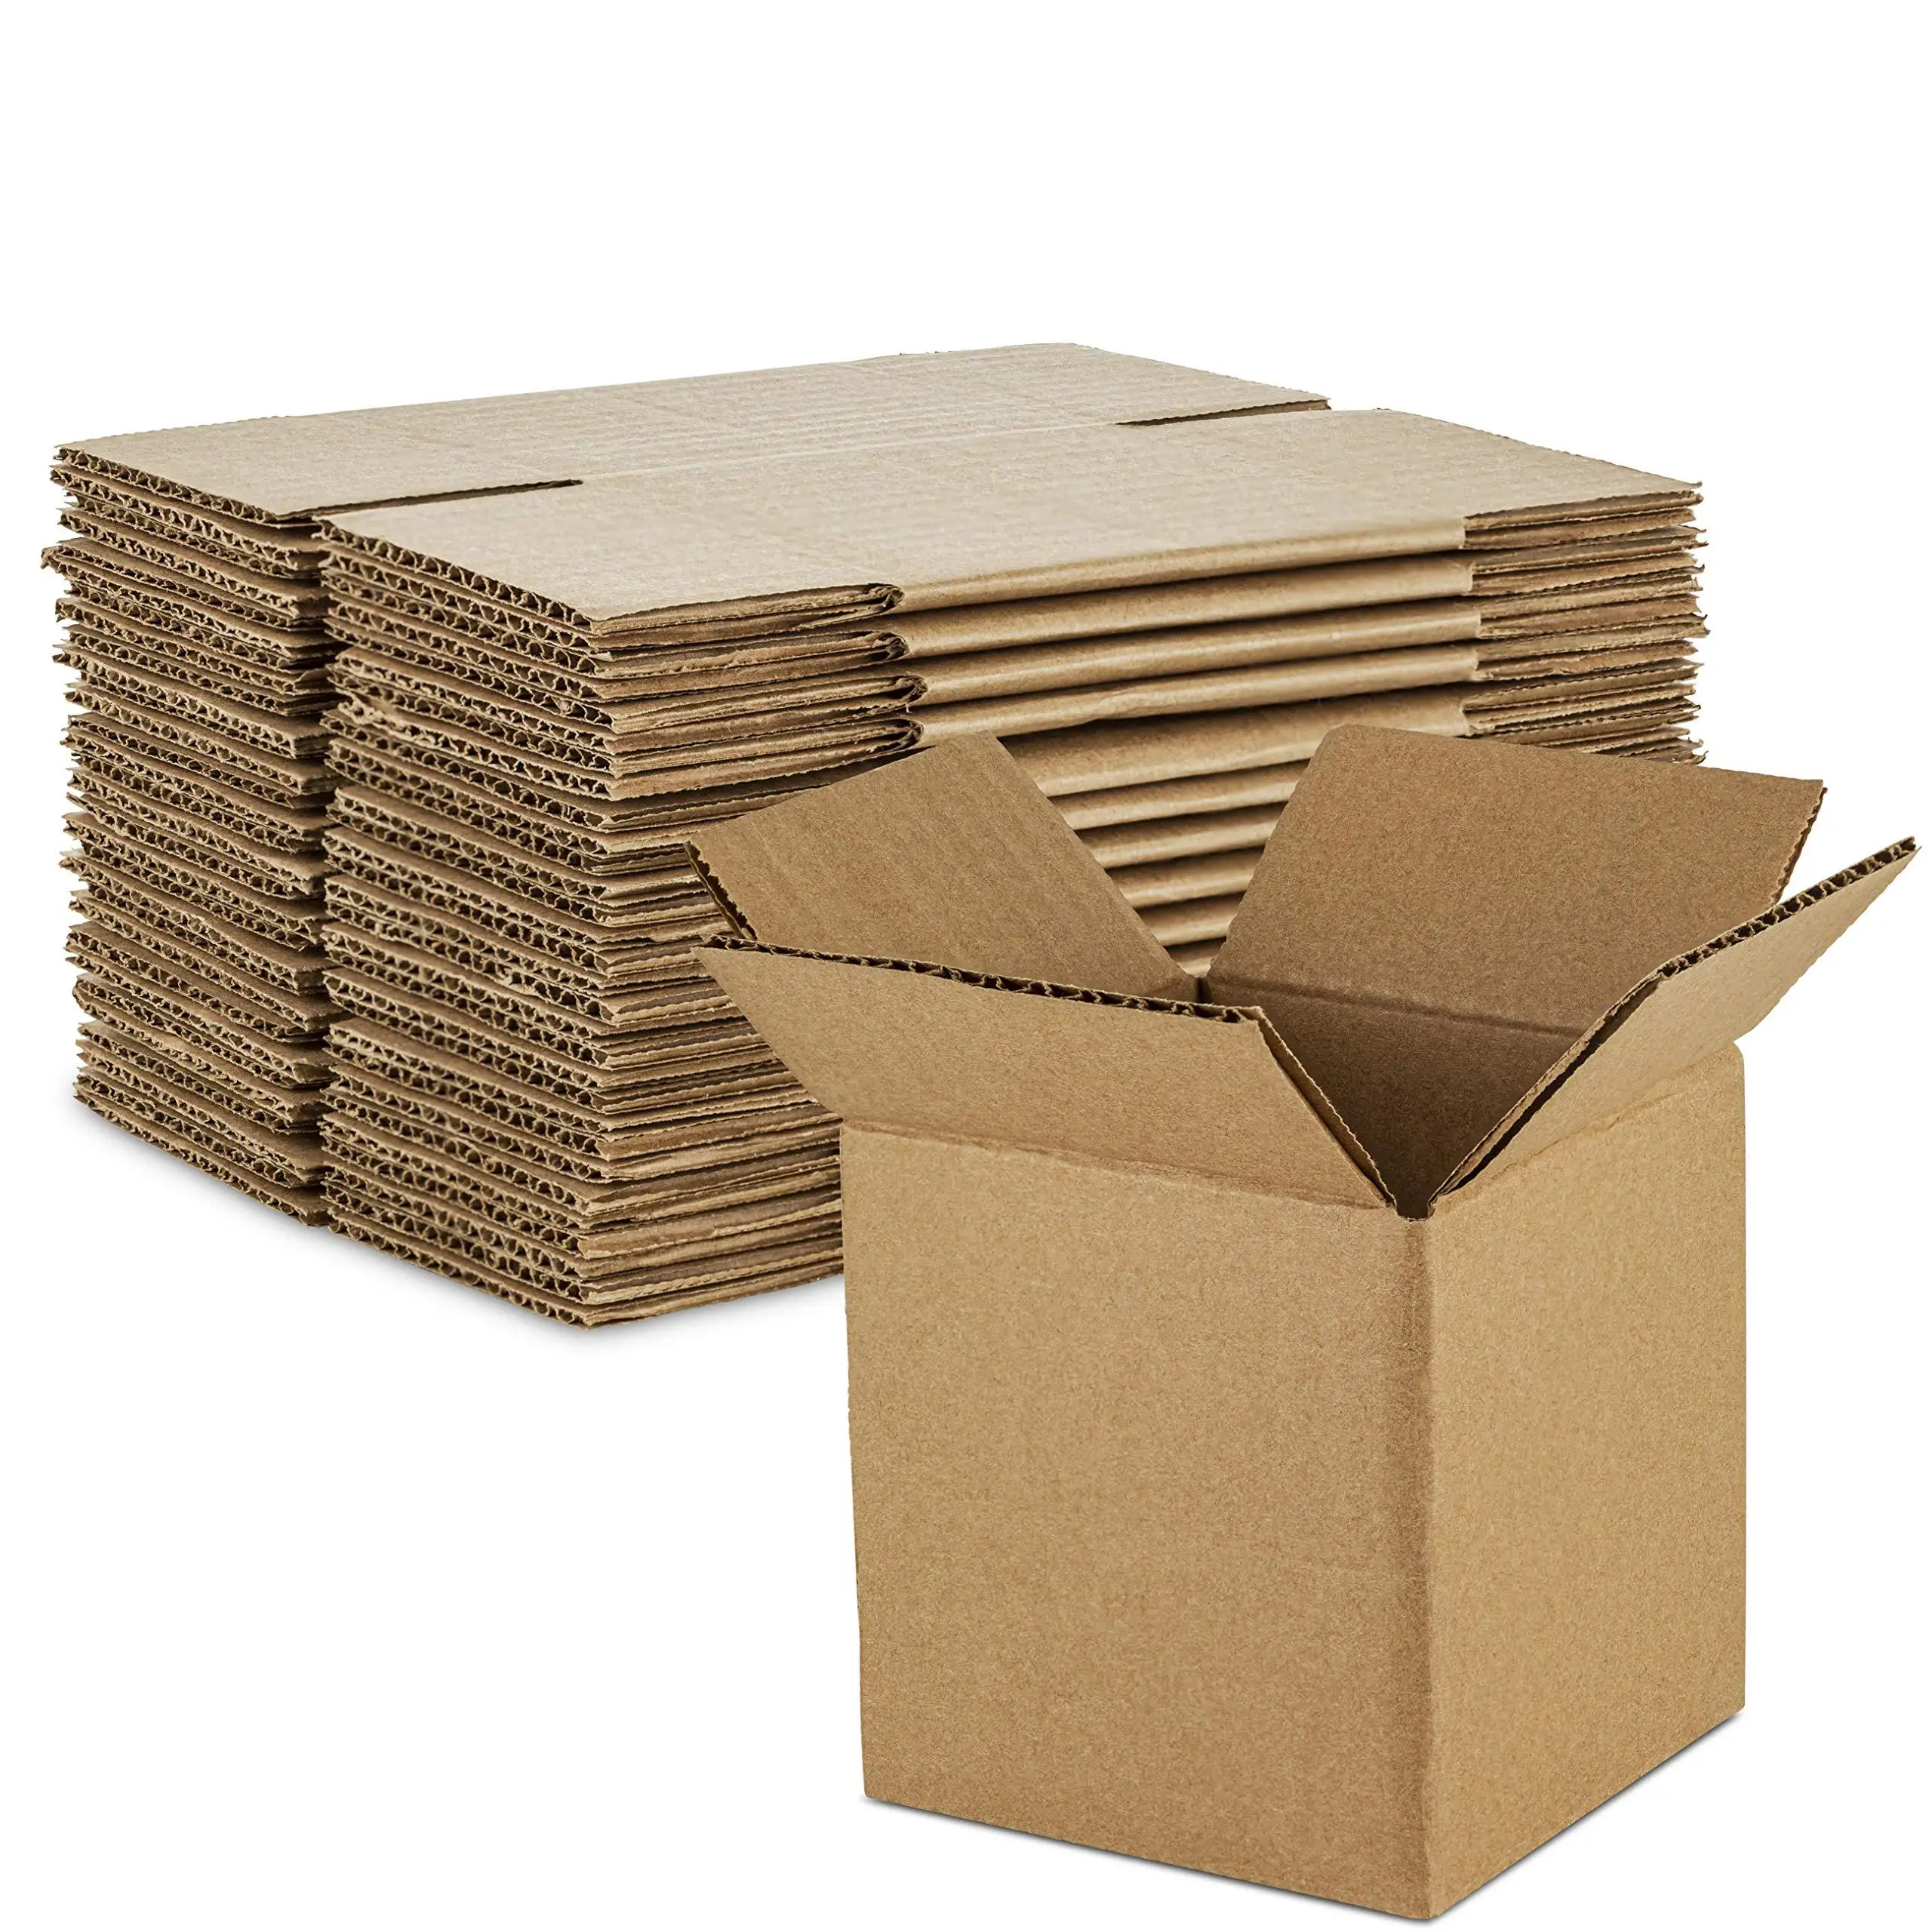 Картонные коробки для переезда. Картонная коробка 112х112х100 мм, т-22 бурый. Кишиневский комбинат картонных изделий. Картонные коробки. Упаковочный картон.